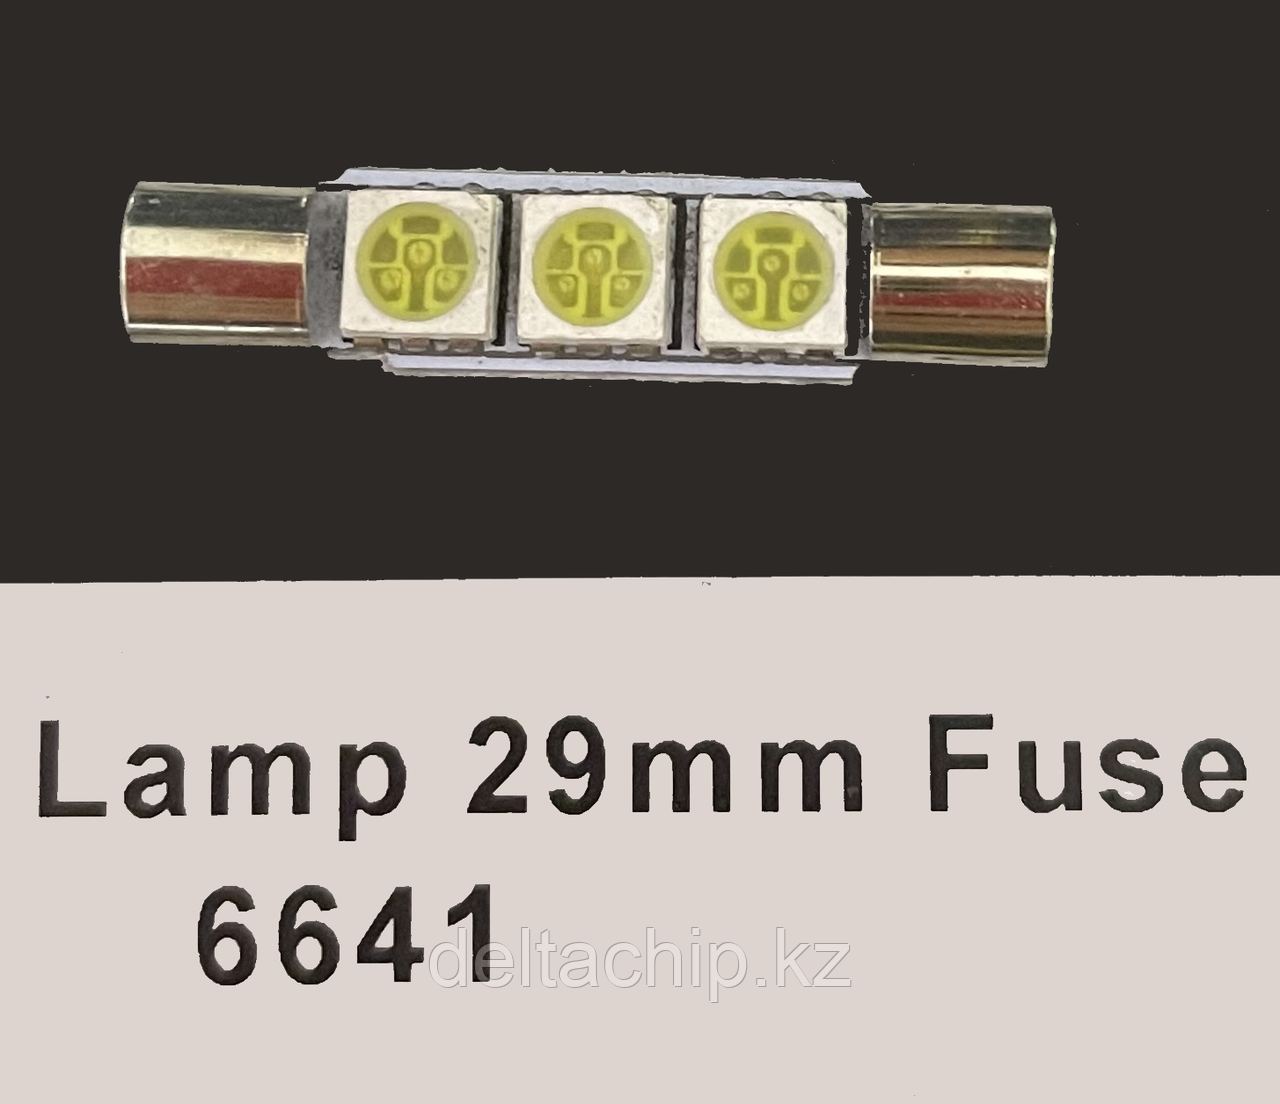 Lamp 29 mm 6641 FUSE